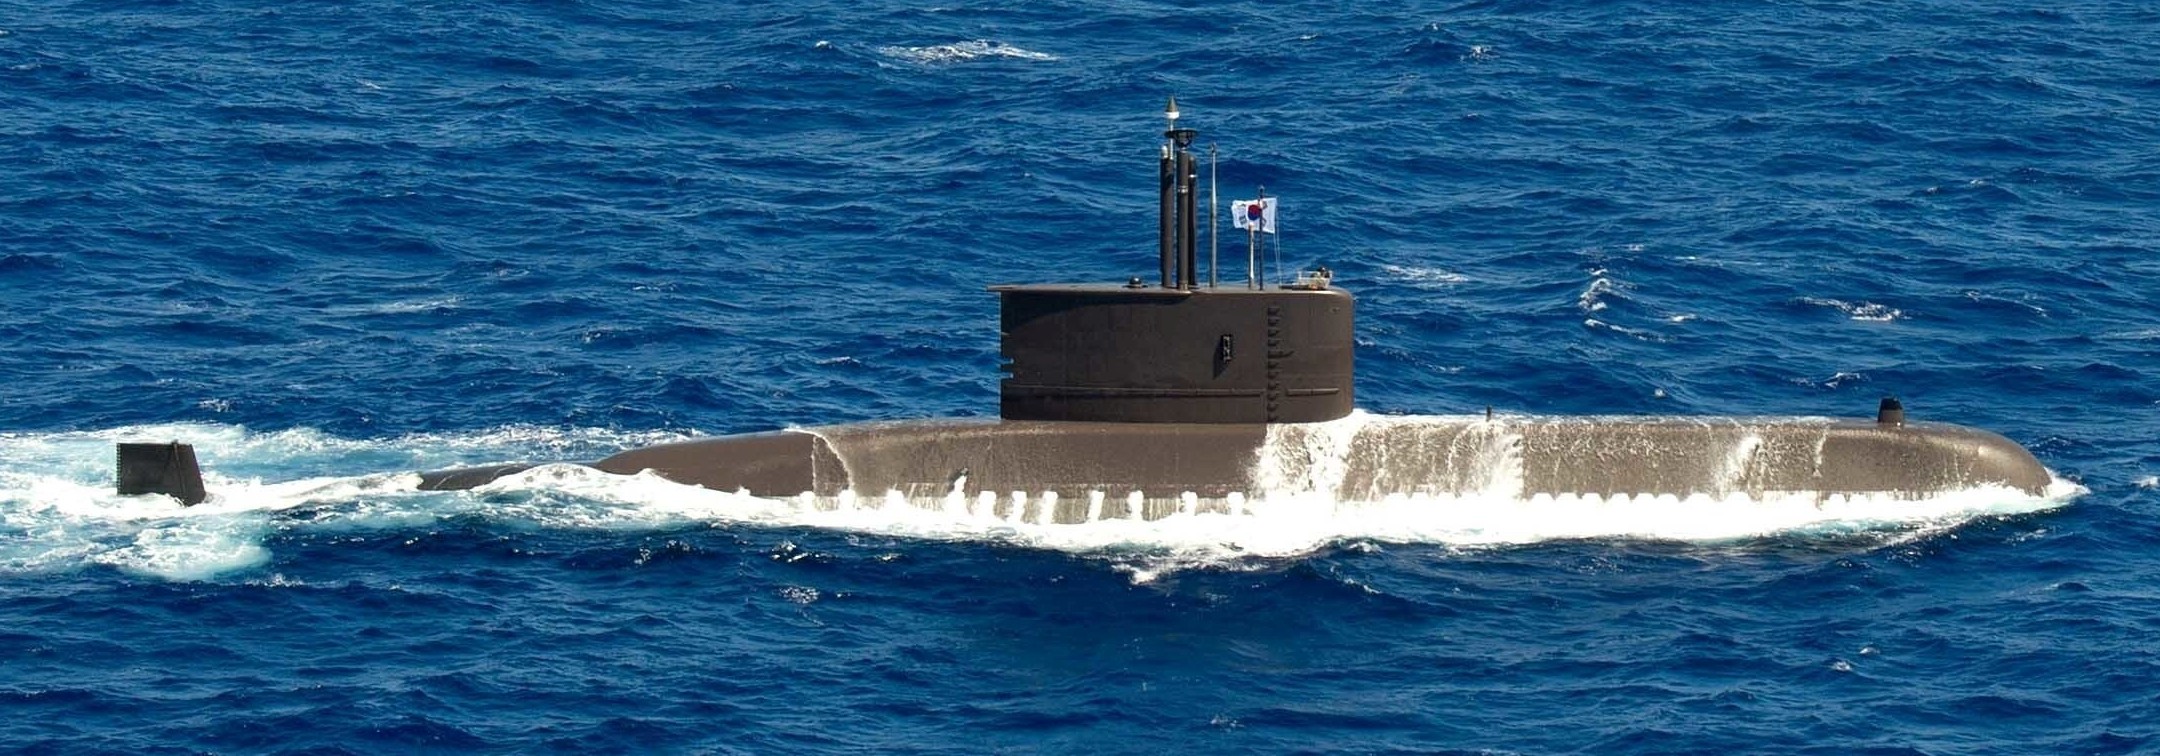 ss-071 roks lee eokgi jang bogo class kss-i type 209-1200 attack submarine republic of korea navy rokn 533mm sut torpedo ugm-84 harpoon ssm 11